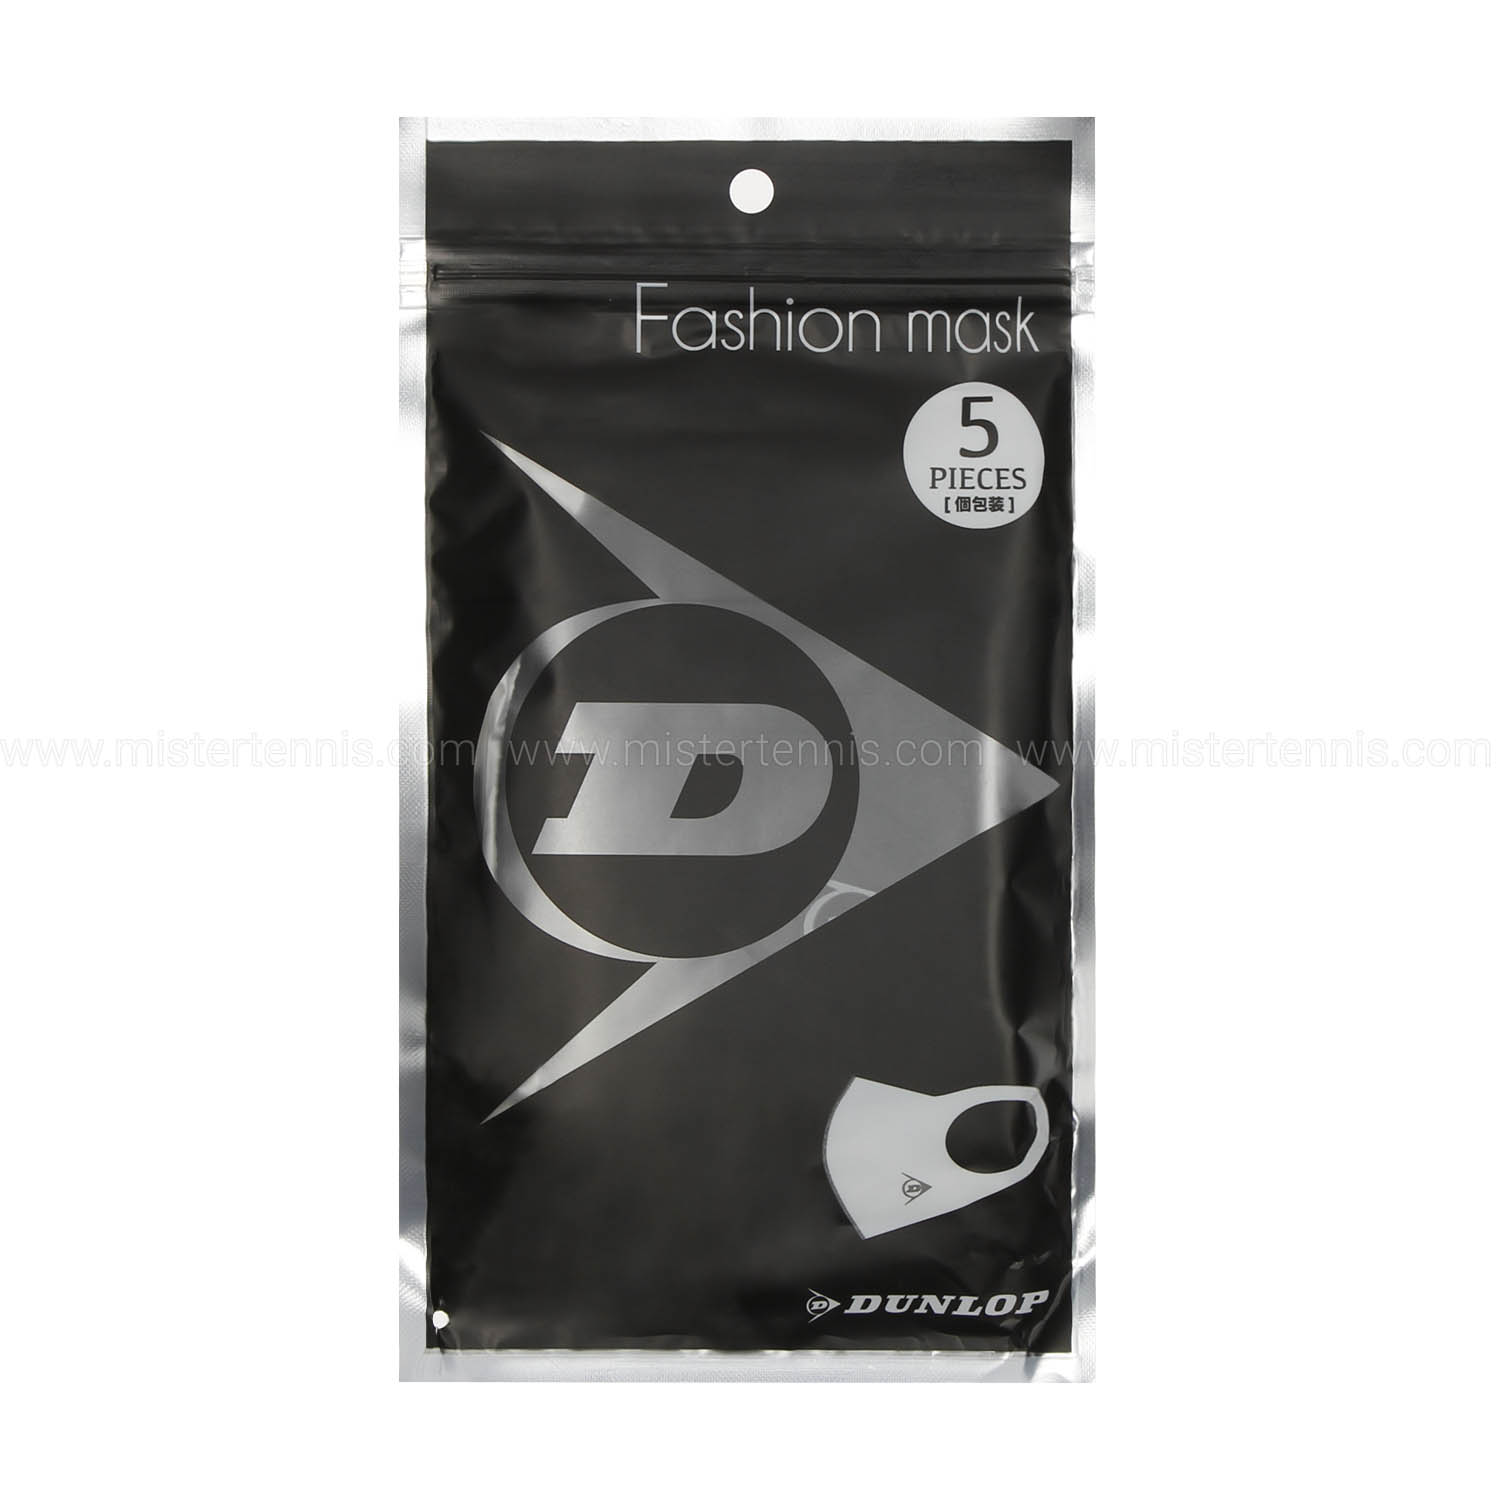 Dunlop Fashion x 5 Mascherina - Black